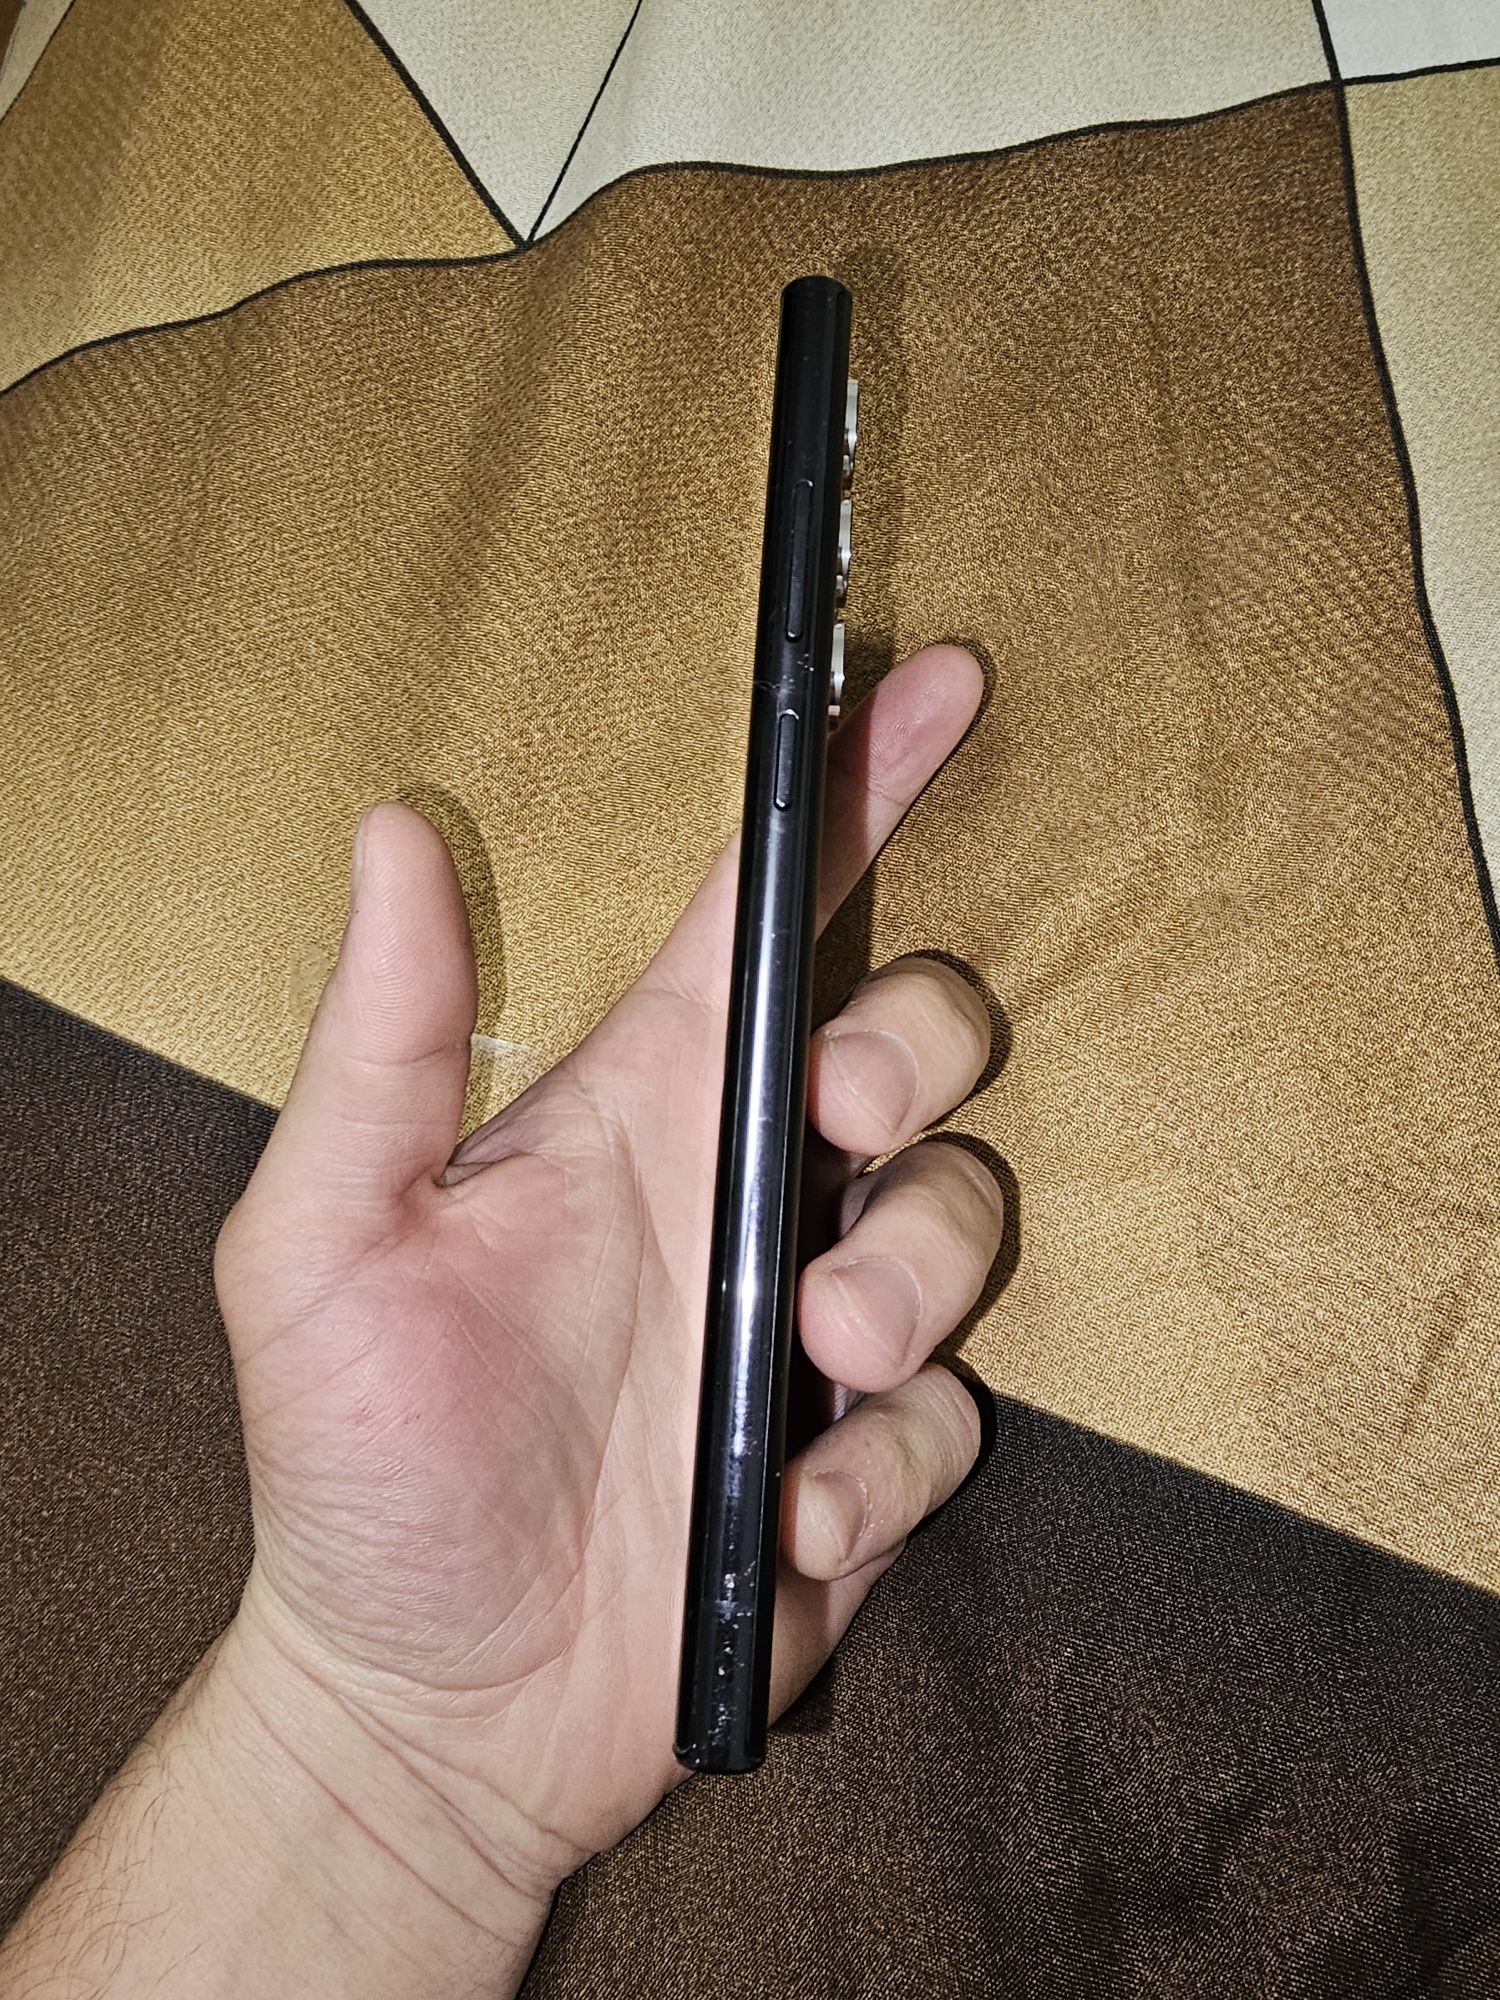 Samsung s22 ultra 128g 8ram